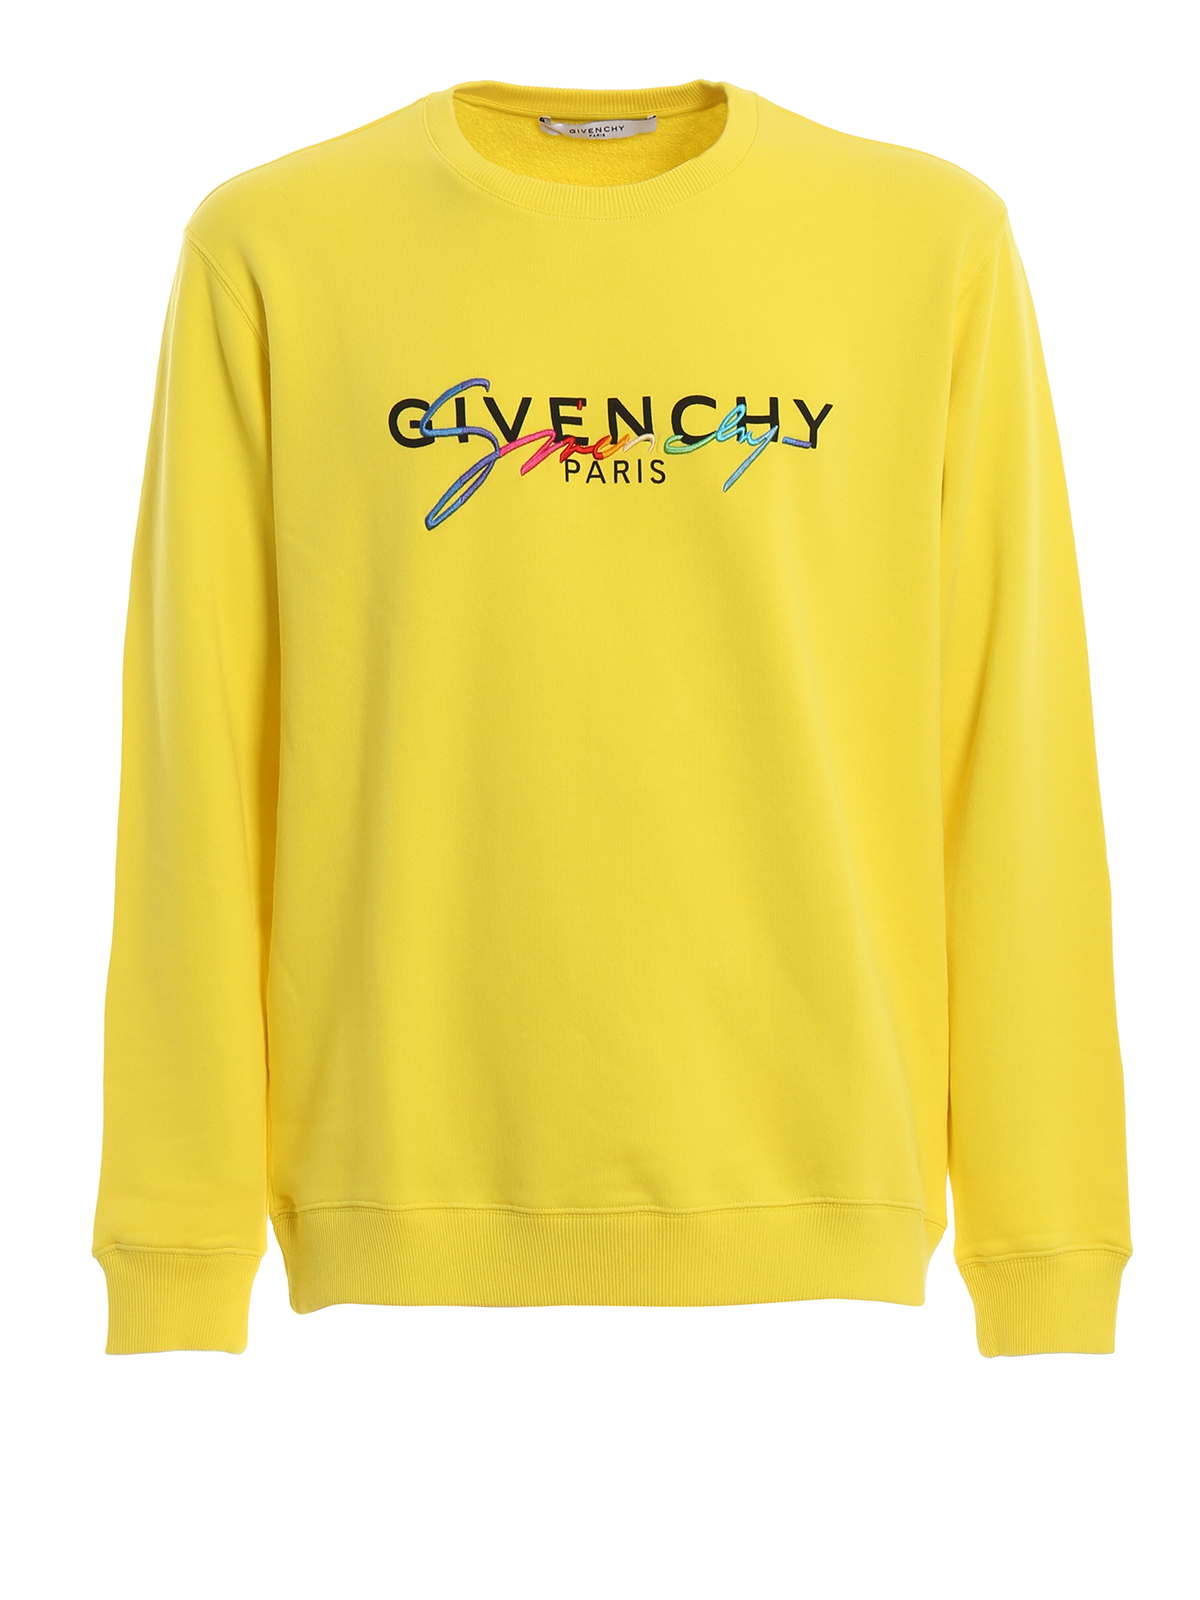 Givenchy paris rainbow embroidery sweatshirt 